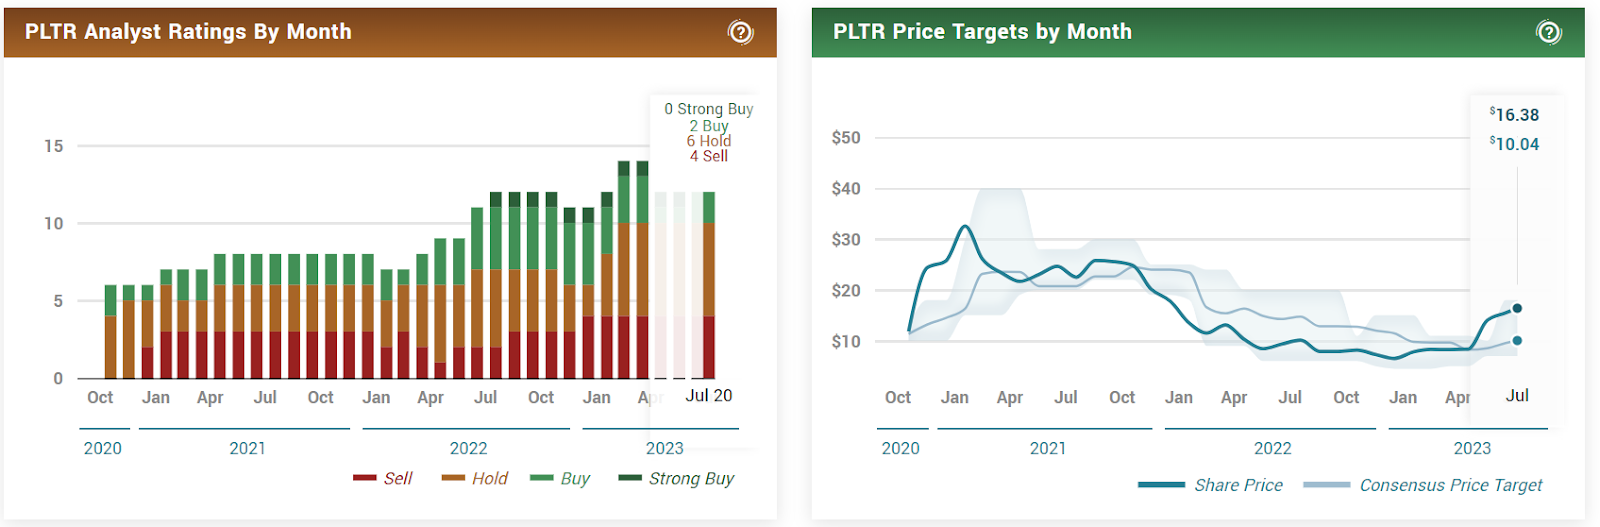 Palantir Technologies Inc. (PLTR Stock) - New Deal Fuels Rally